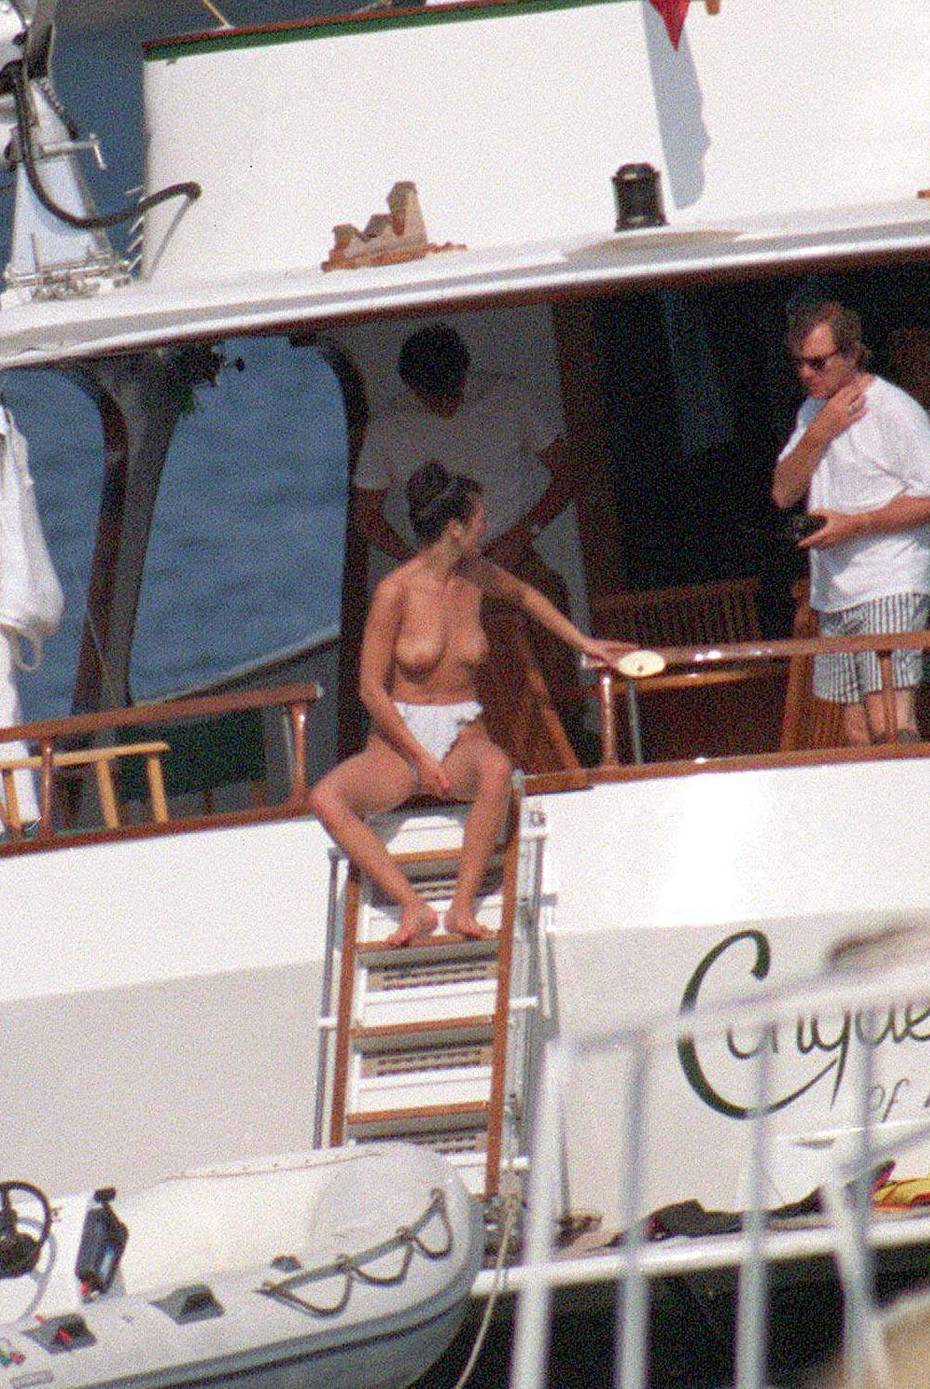 catherine-zeta-jones-topless-on-a-yacht-7945-1.jpg